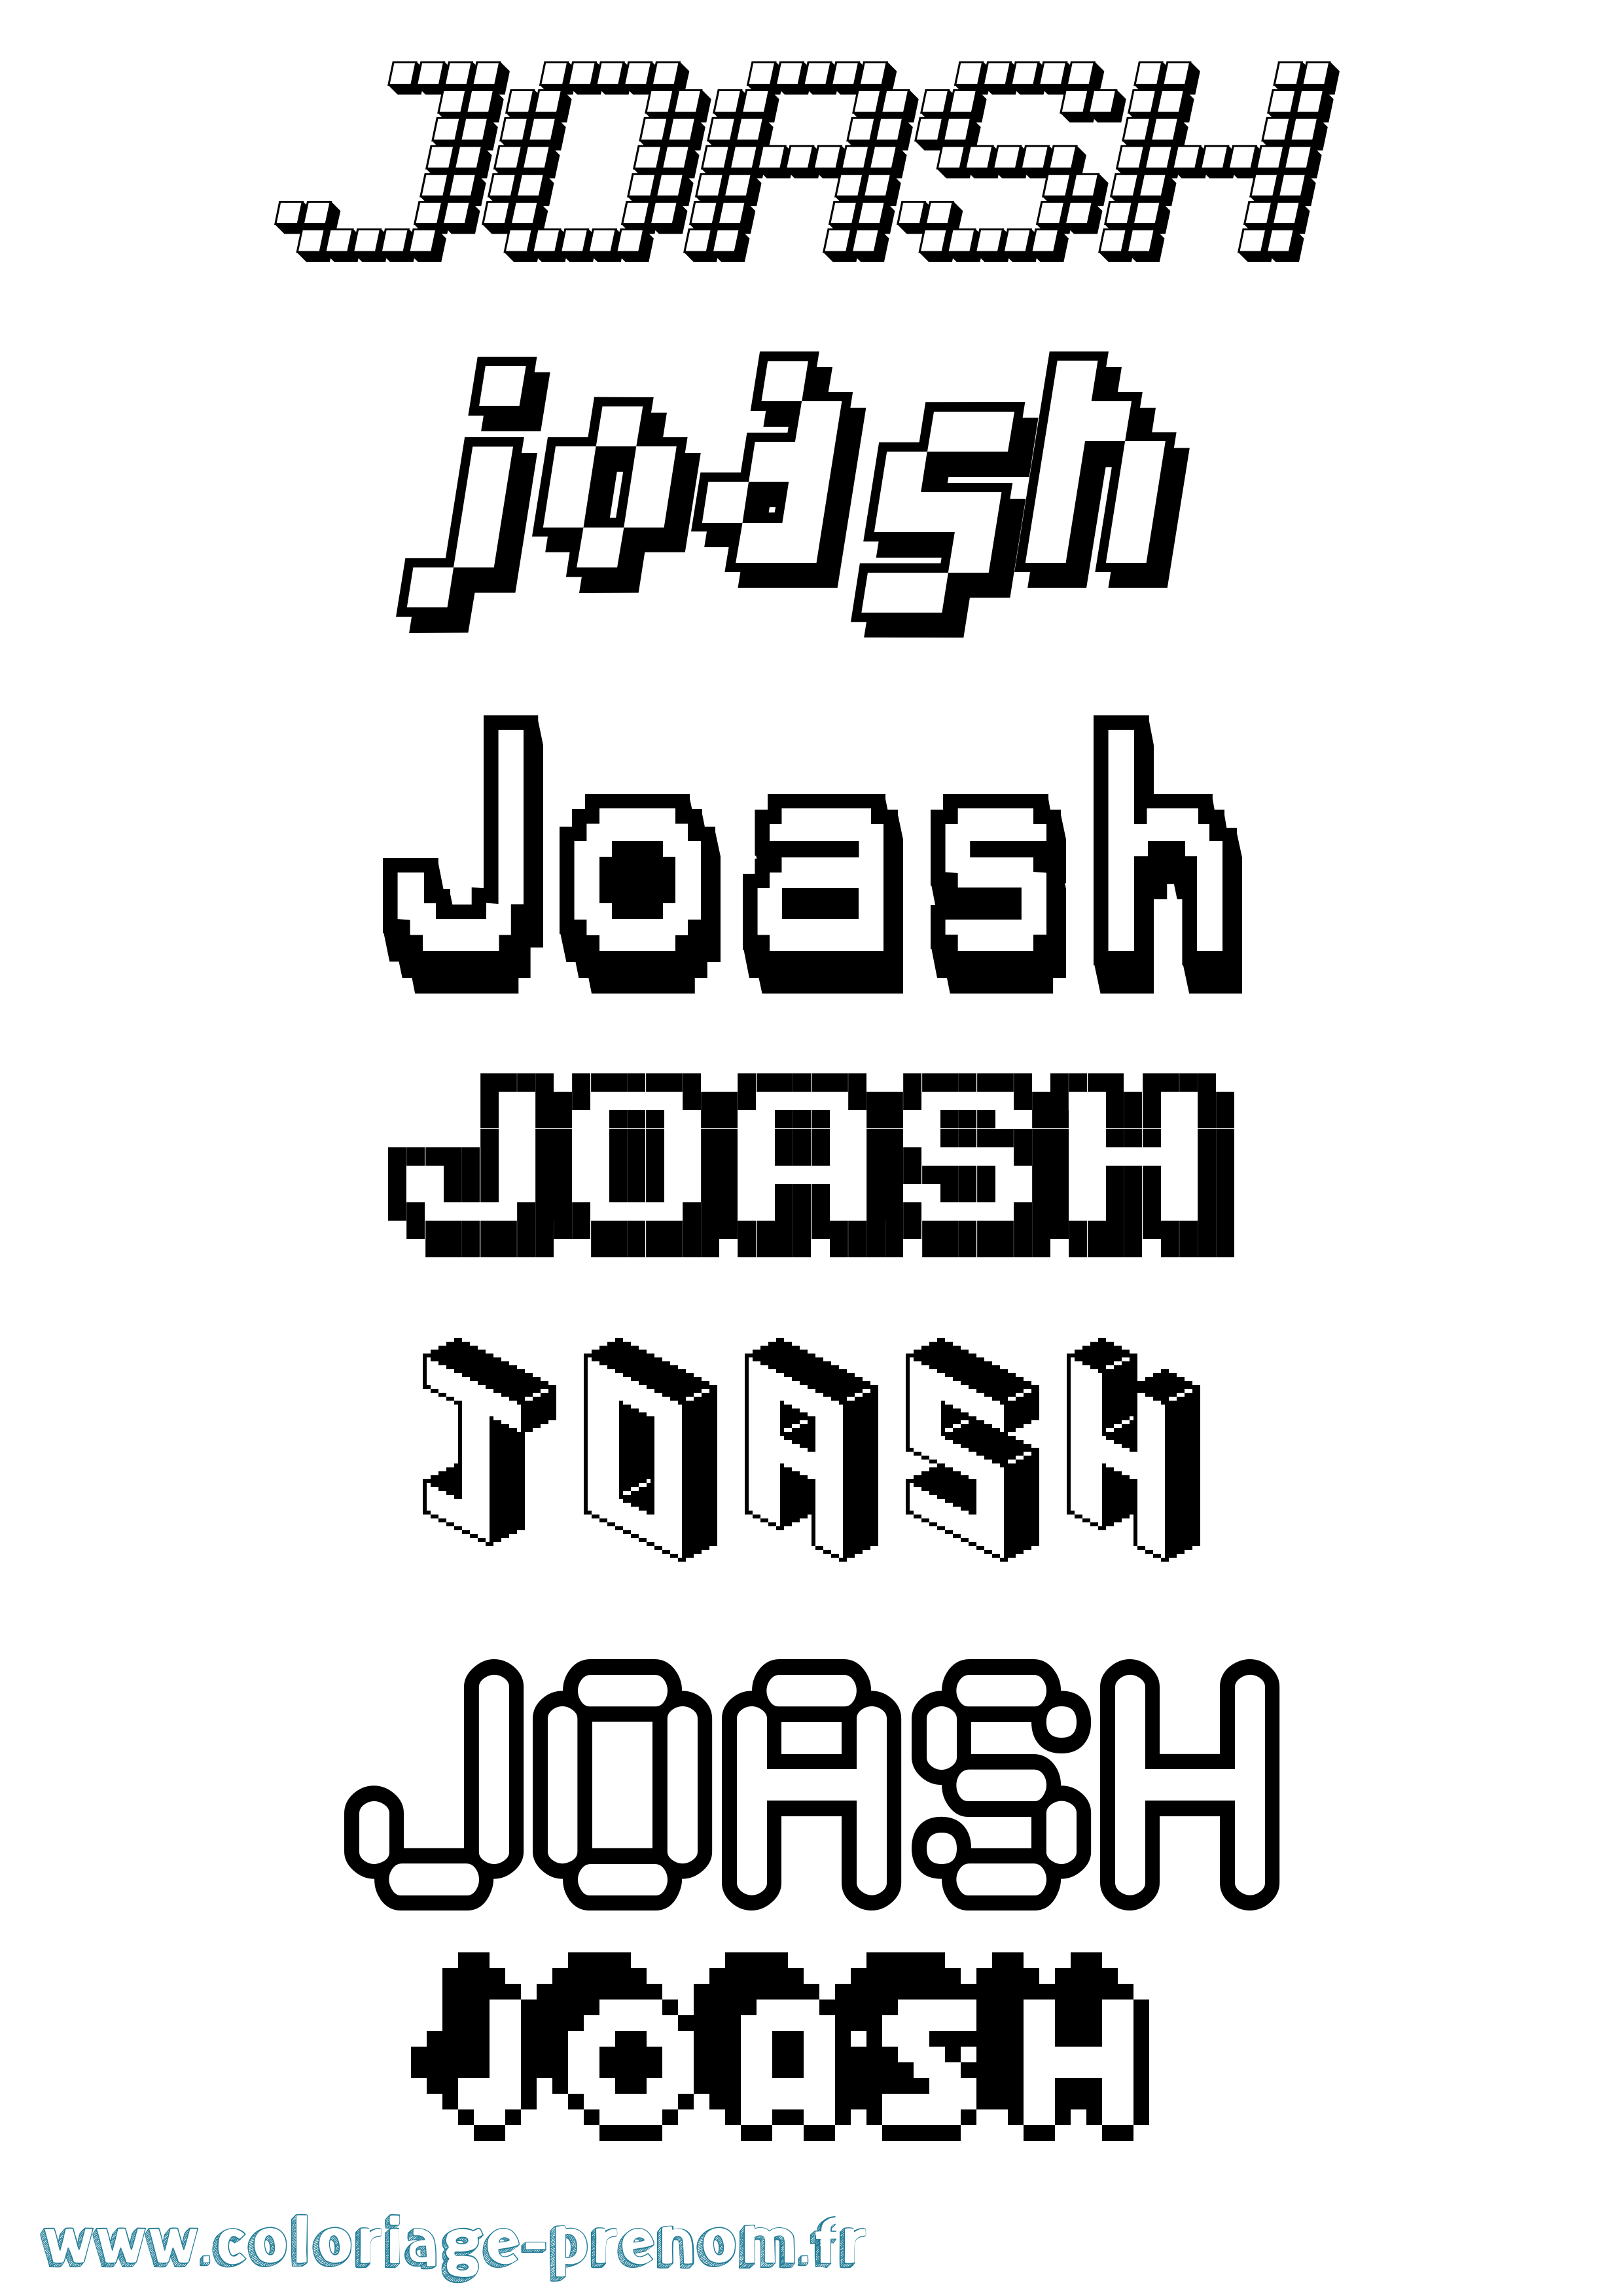 Coloriage prénom Joash Pixel